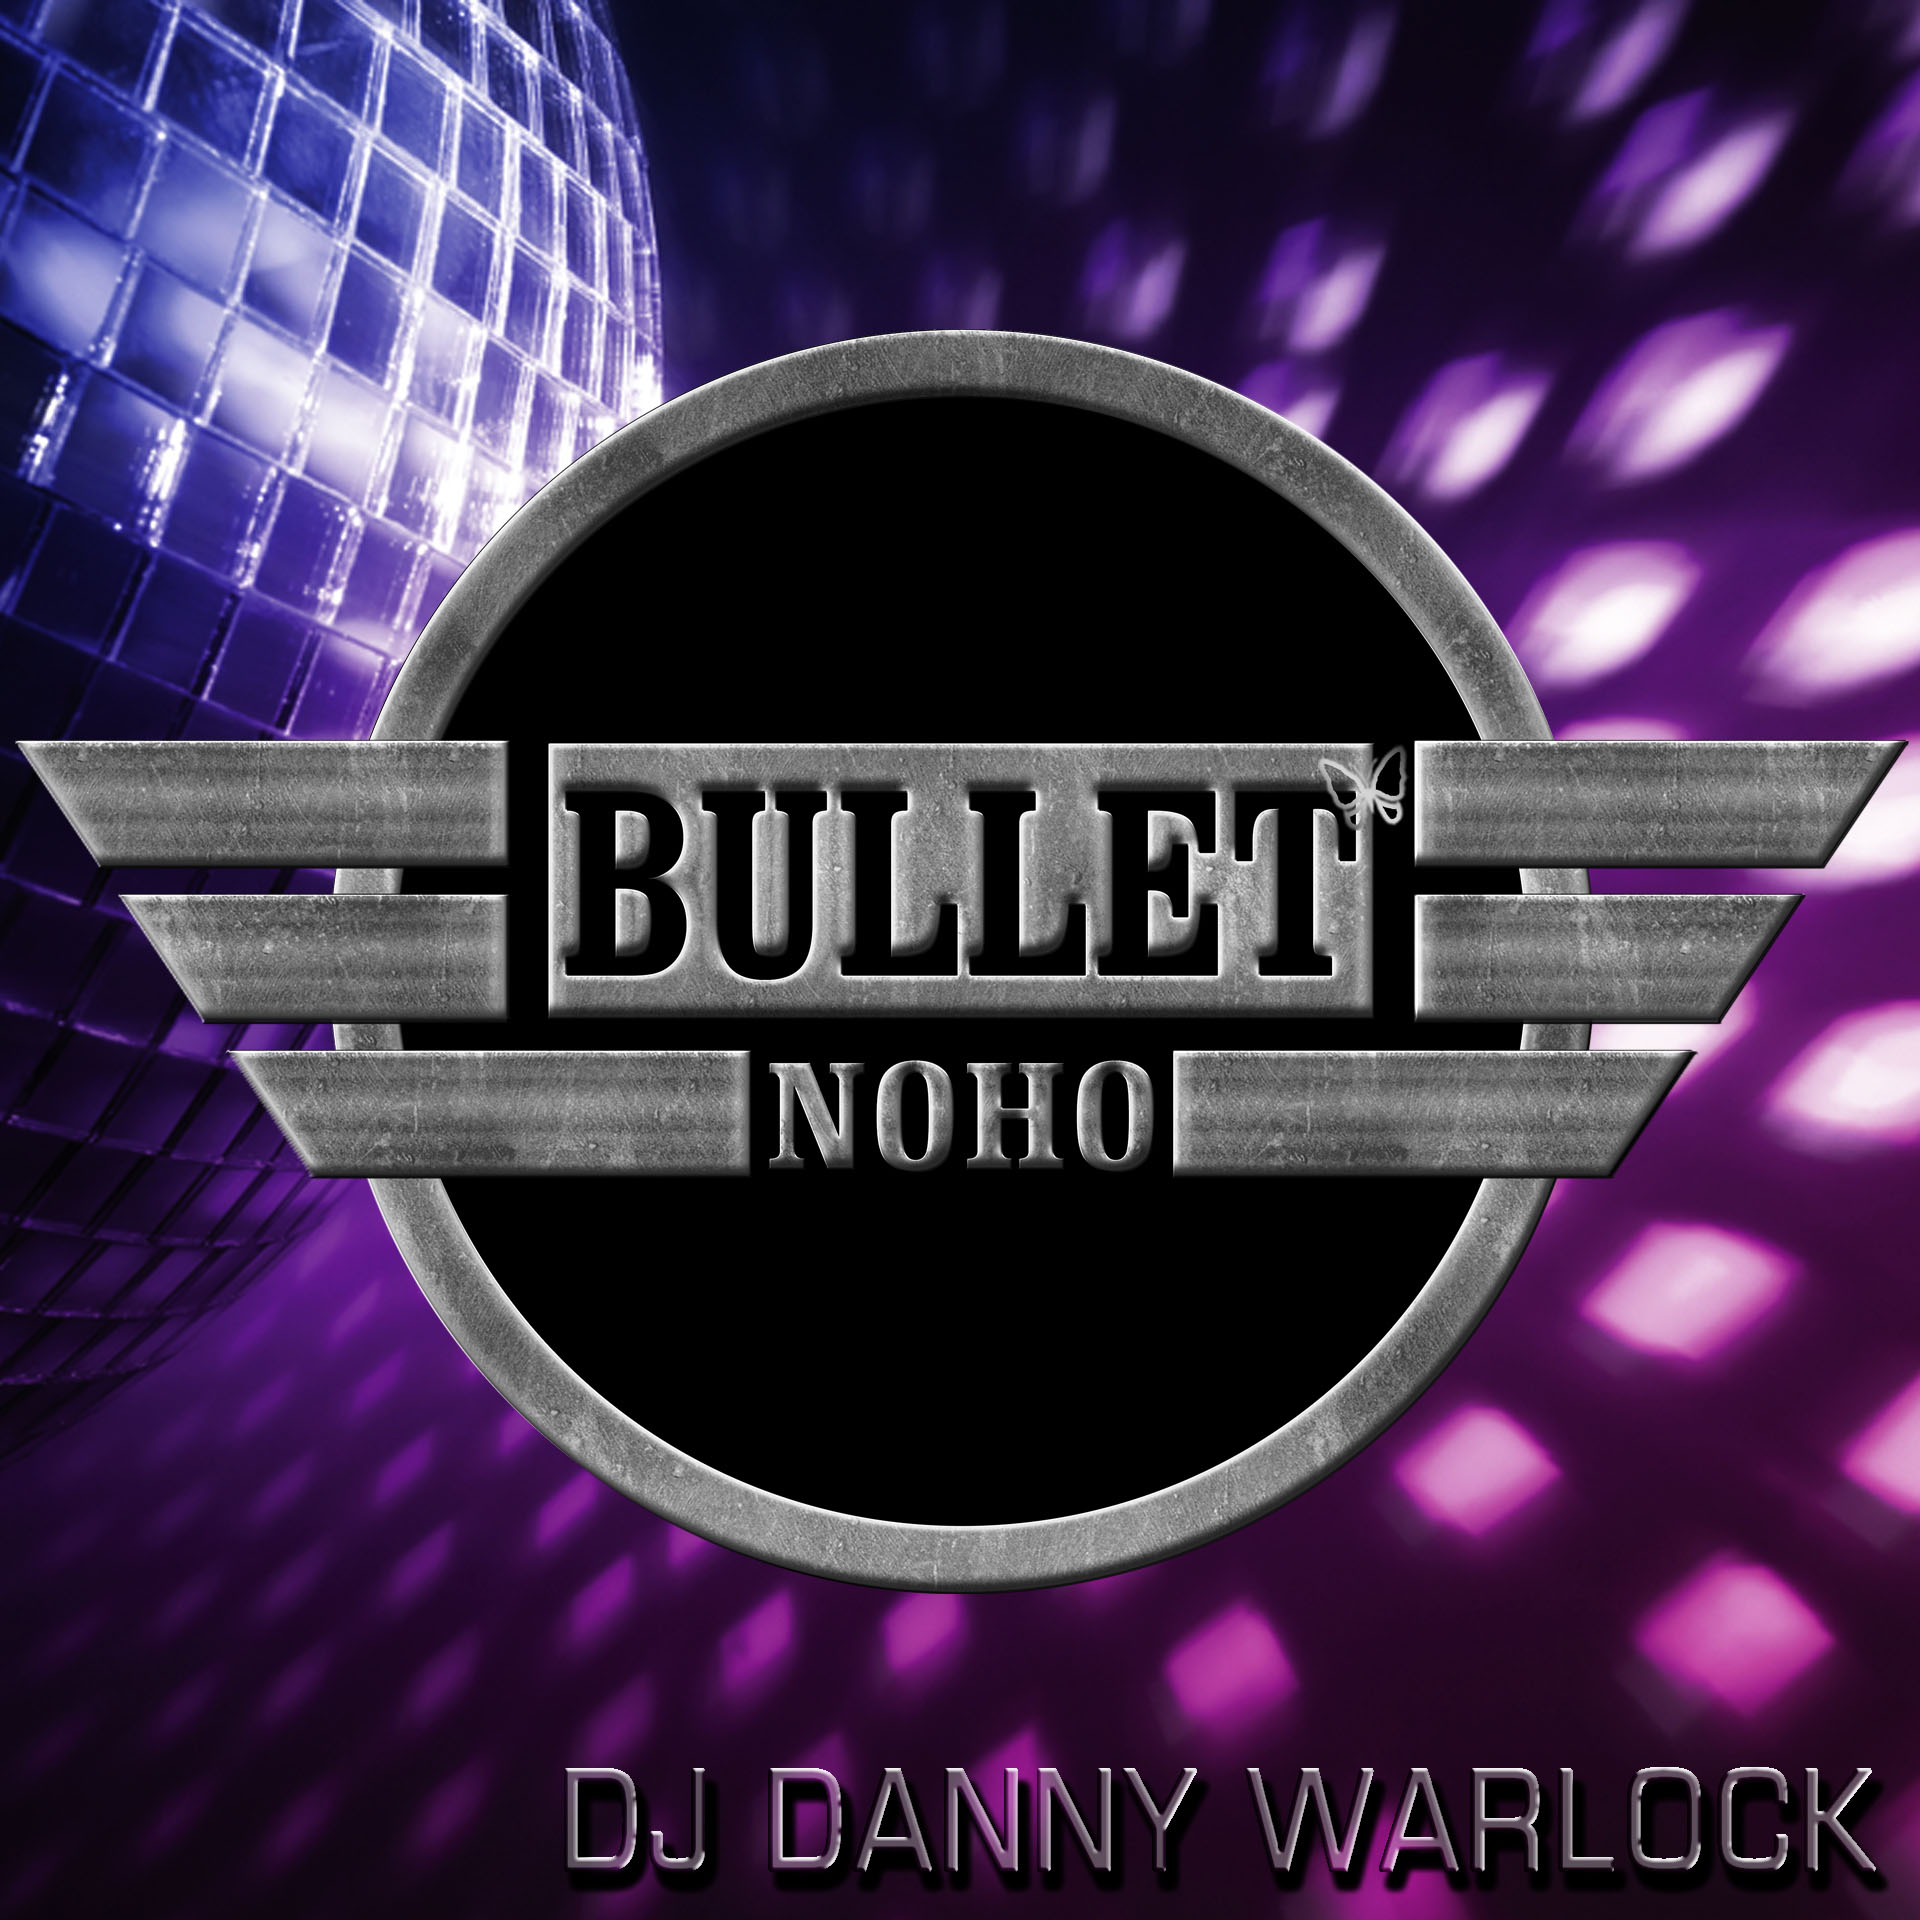 DJ DANNY WARLOCK: Saturday, May 7, 2022 from 8:00 PM to 2:00 AM